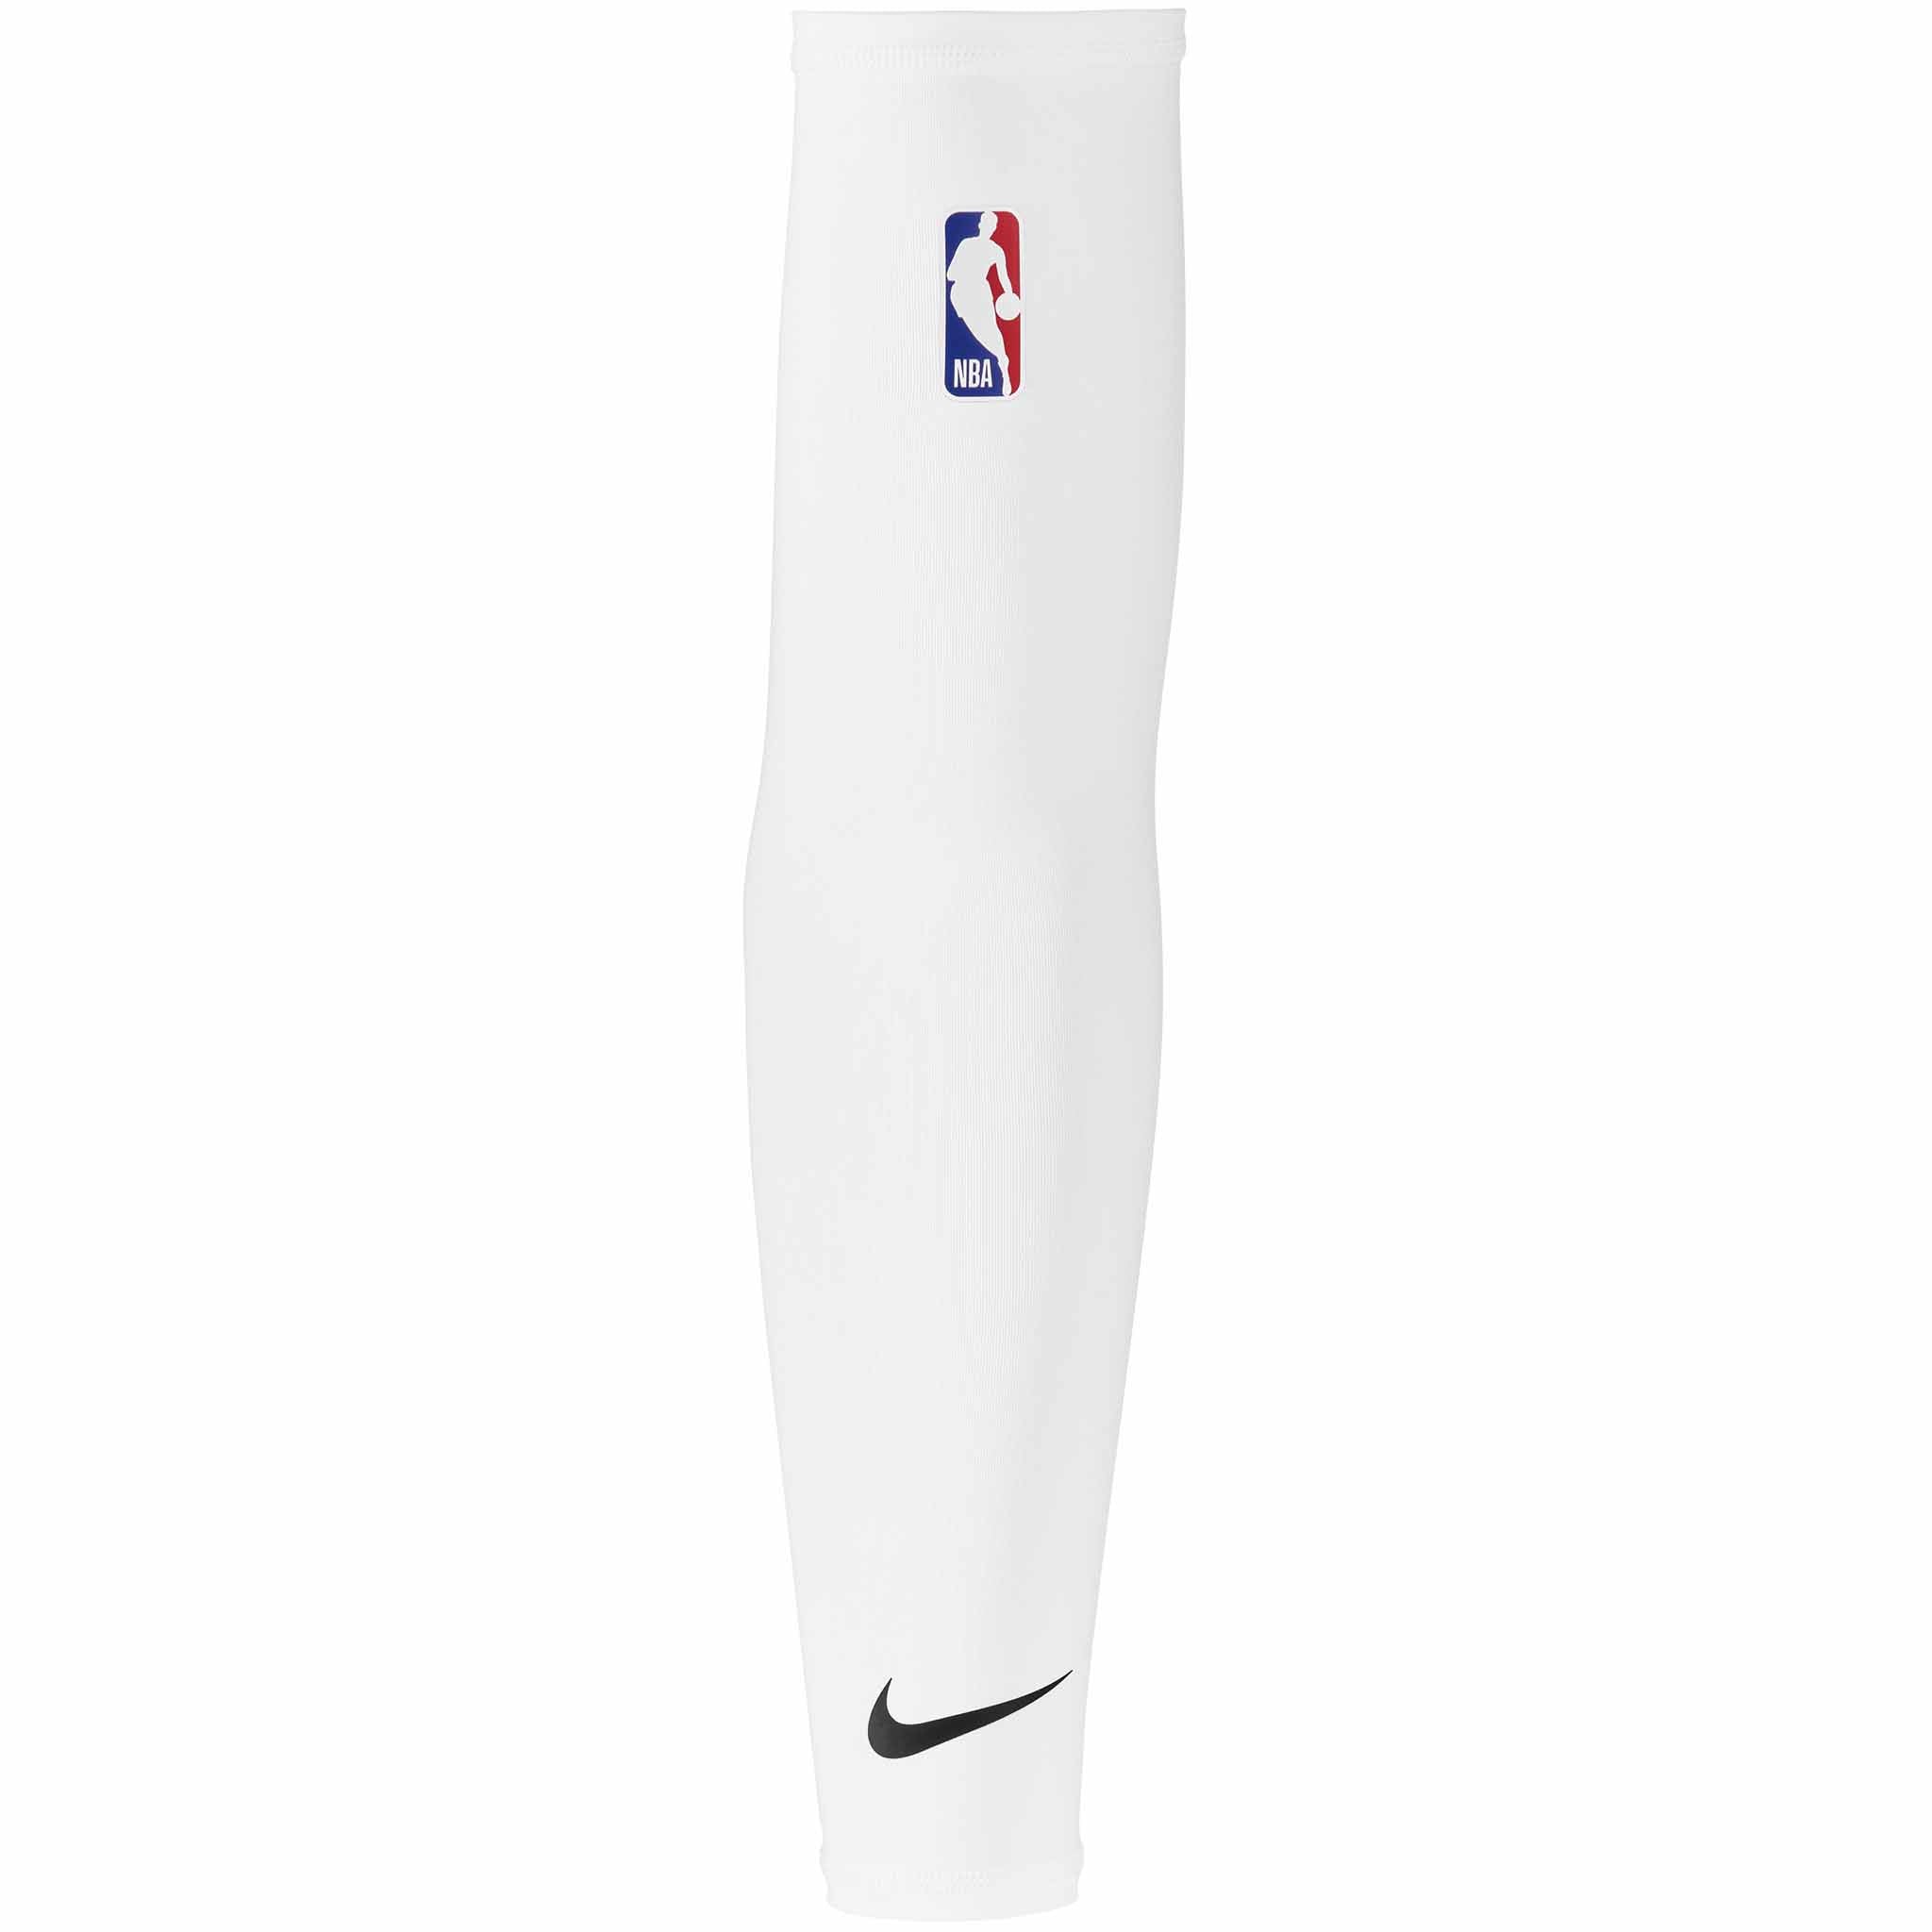 Nike NBA Shooter Sleeves 2.0 basketball sleeve - Soccer Sport Fitness